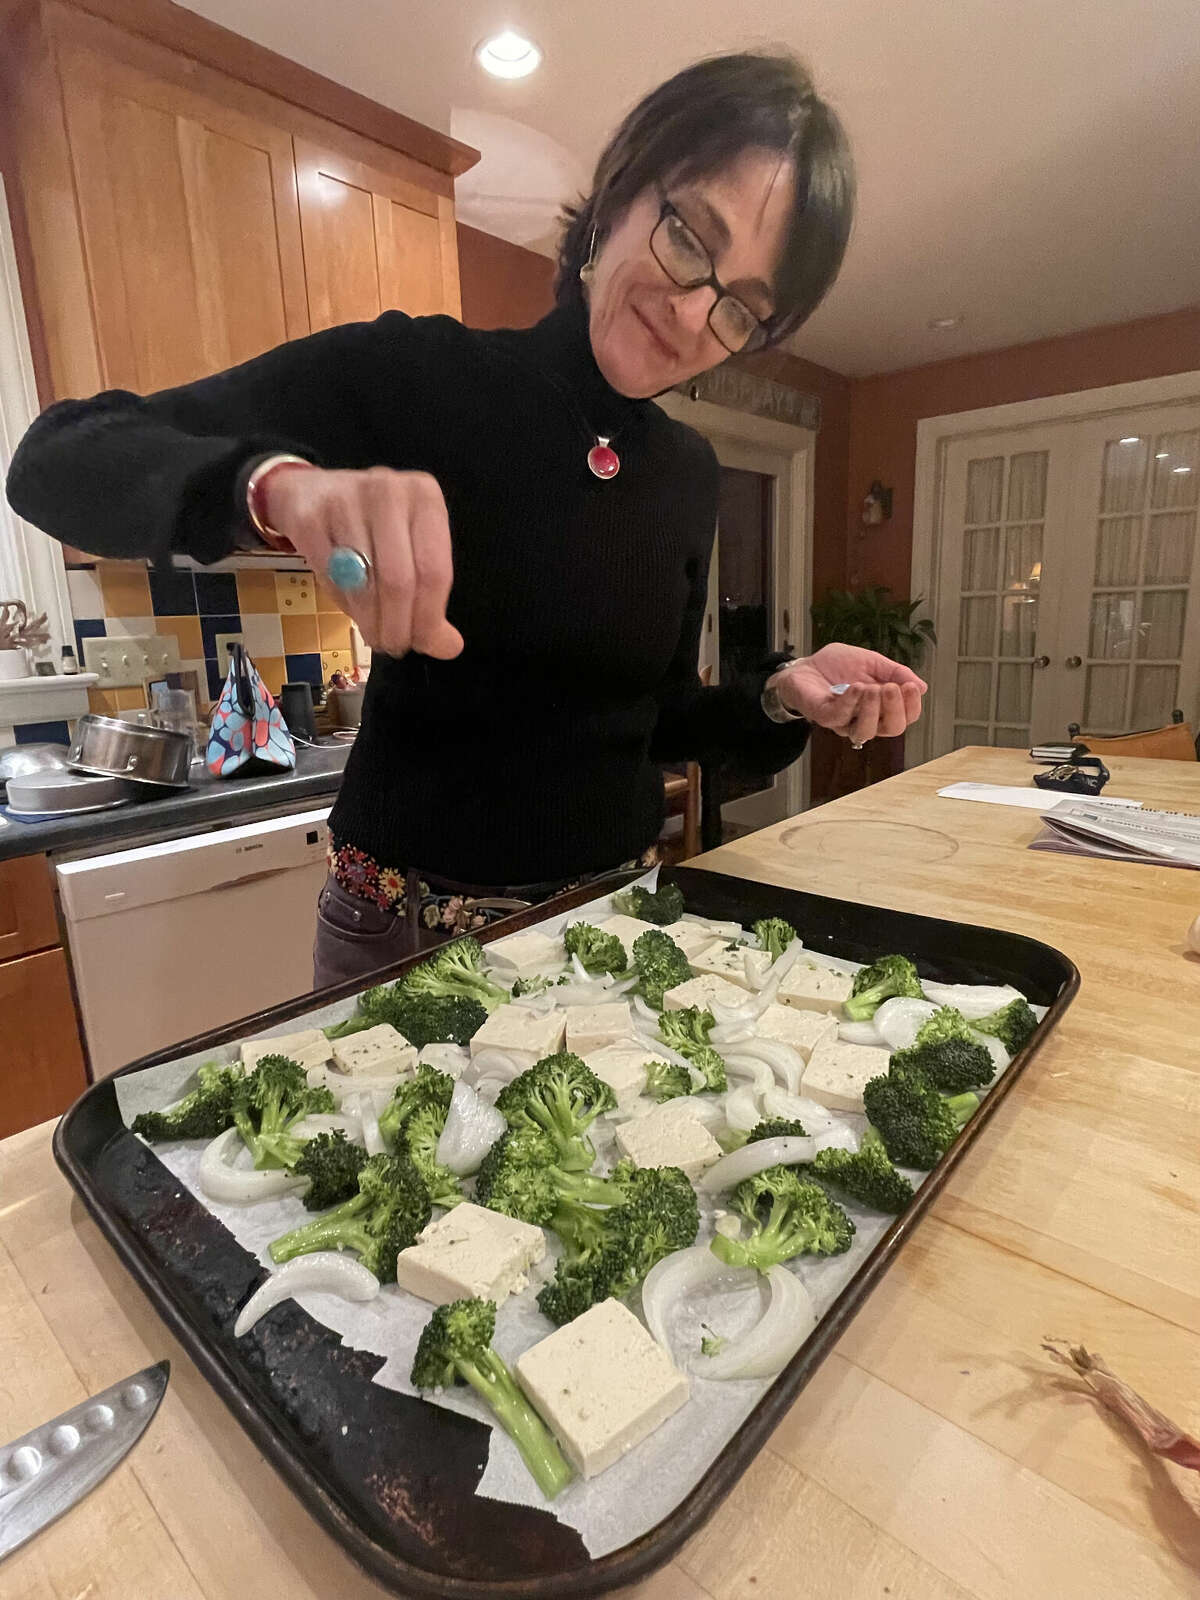 Caroline Barrett seasons pressed tofu and broccoli before roasting in the oven.